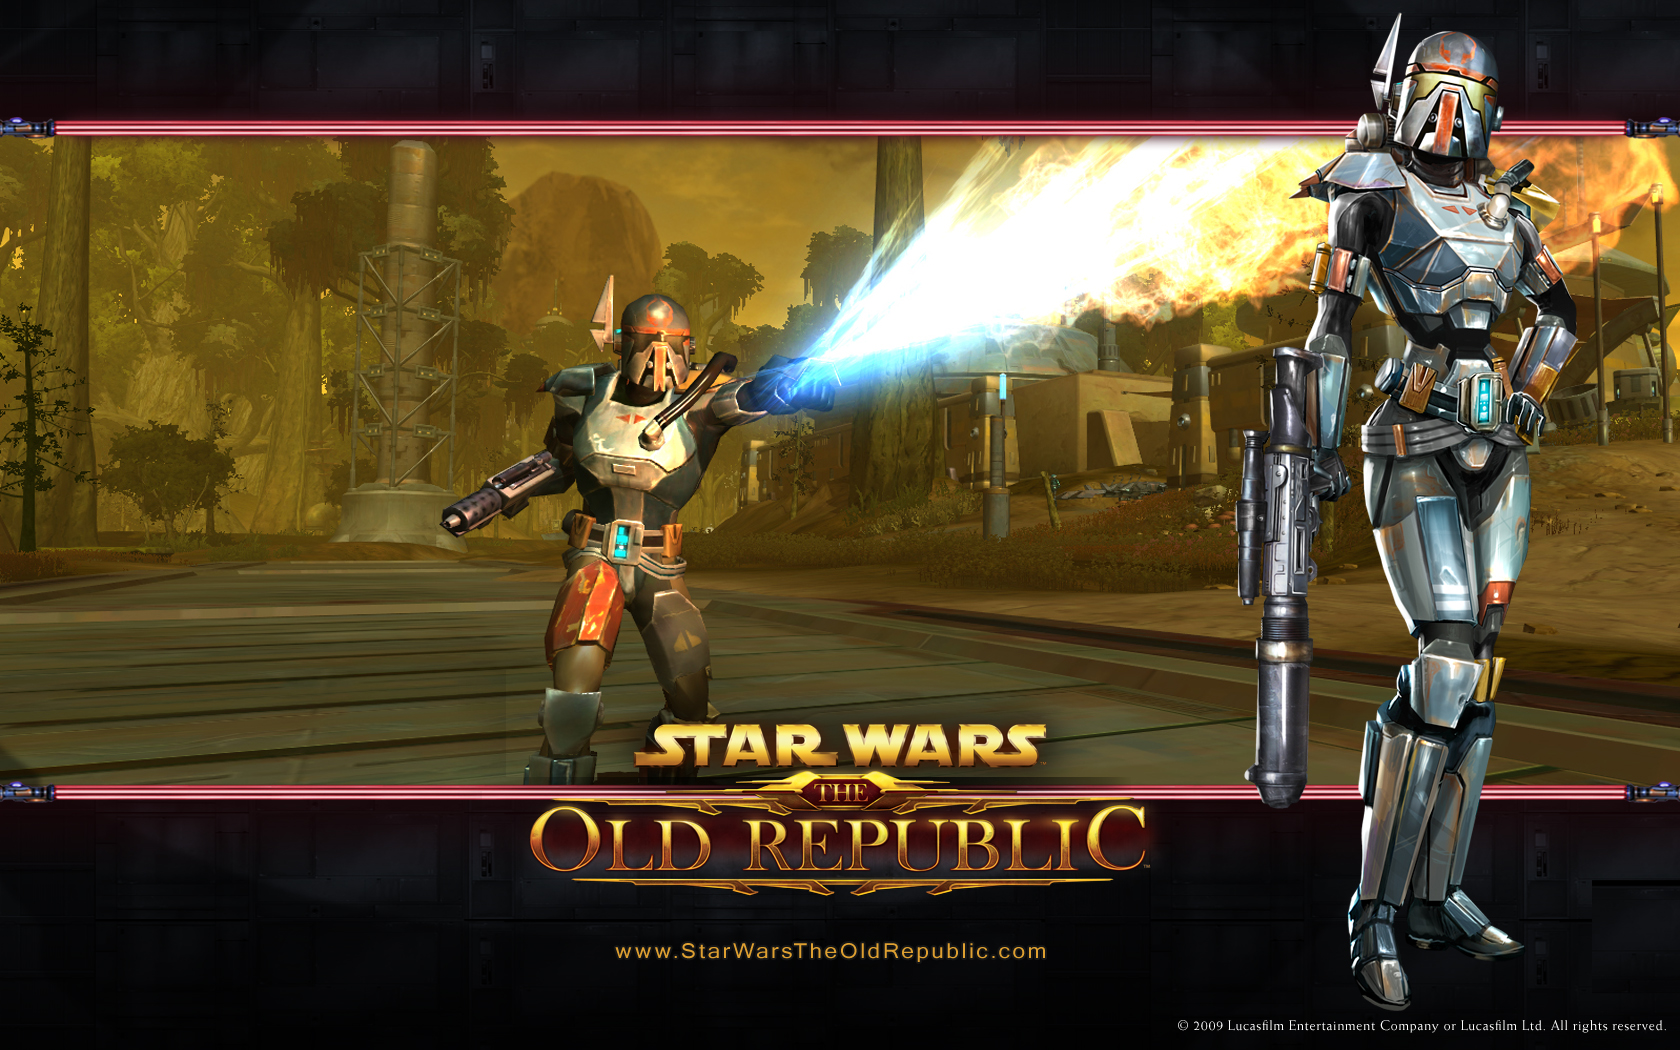 Star wars the old republic key generator online